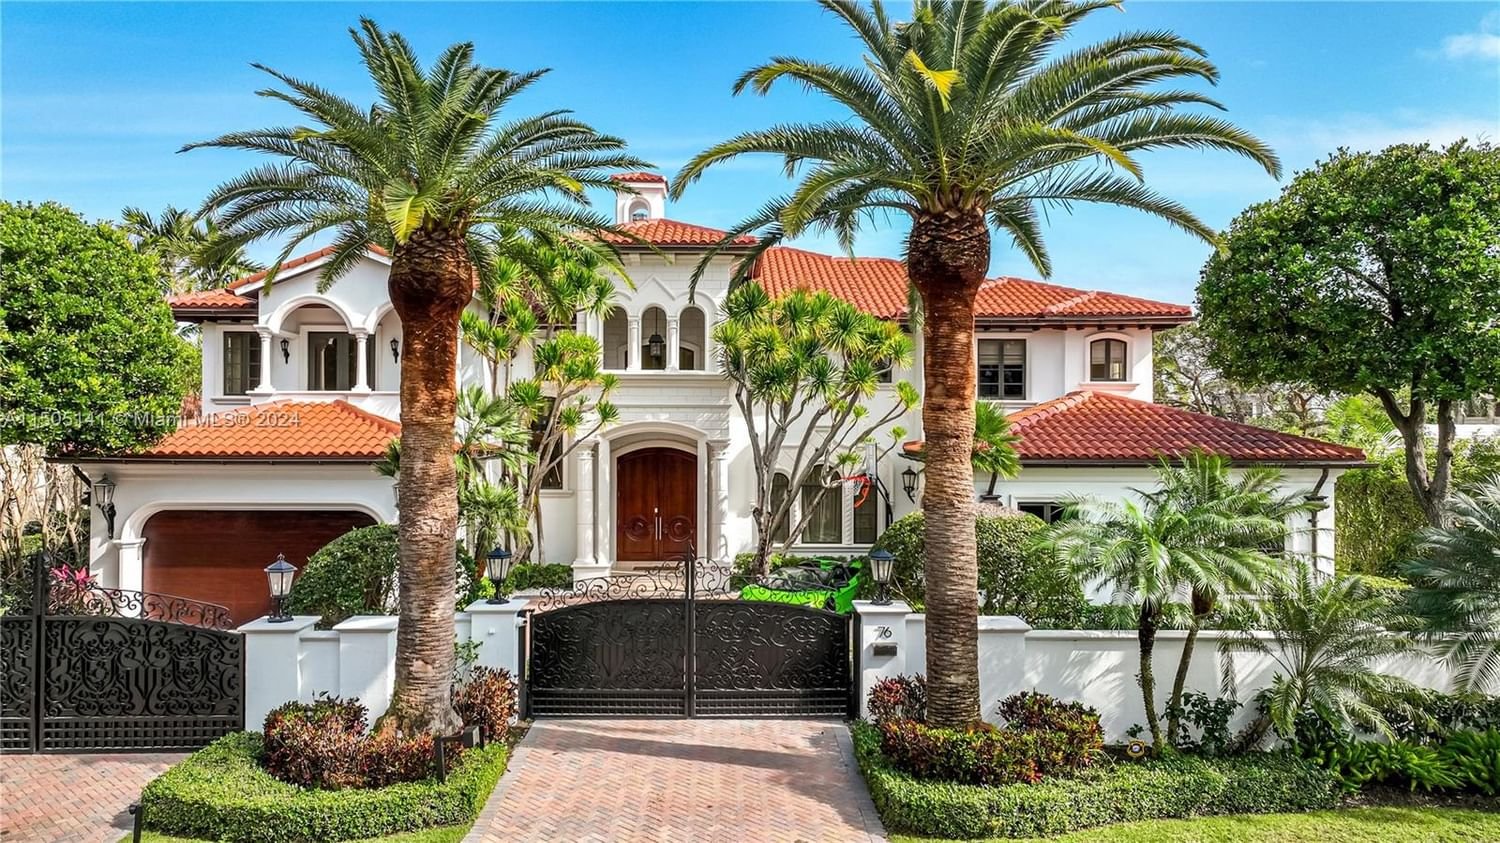 Real estate property located at 76 Royal Palm Dr, Broward County, NURMI ISLES ISLAND NO 1, Fort Lauderdale, FL